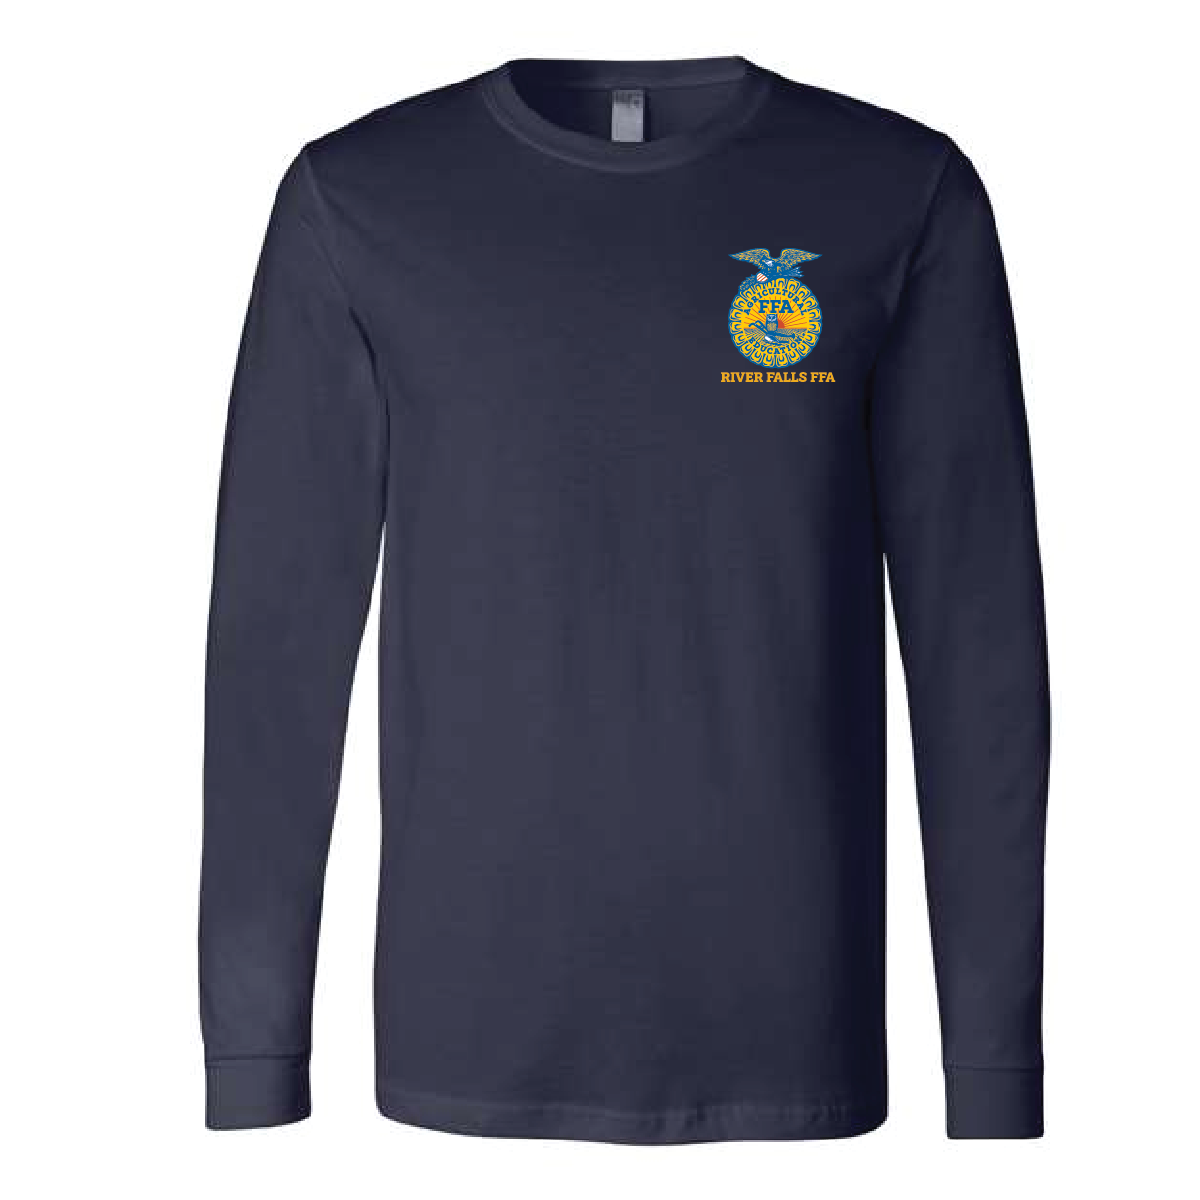 River Falls FFA Long Sleeve Shirt